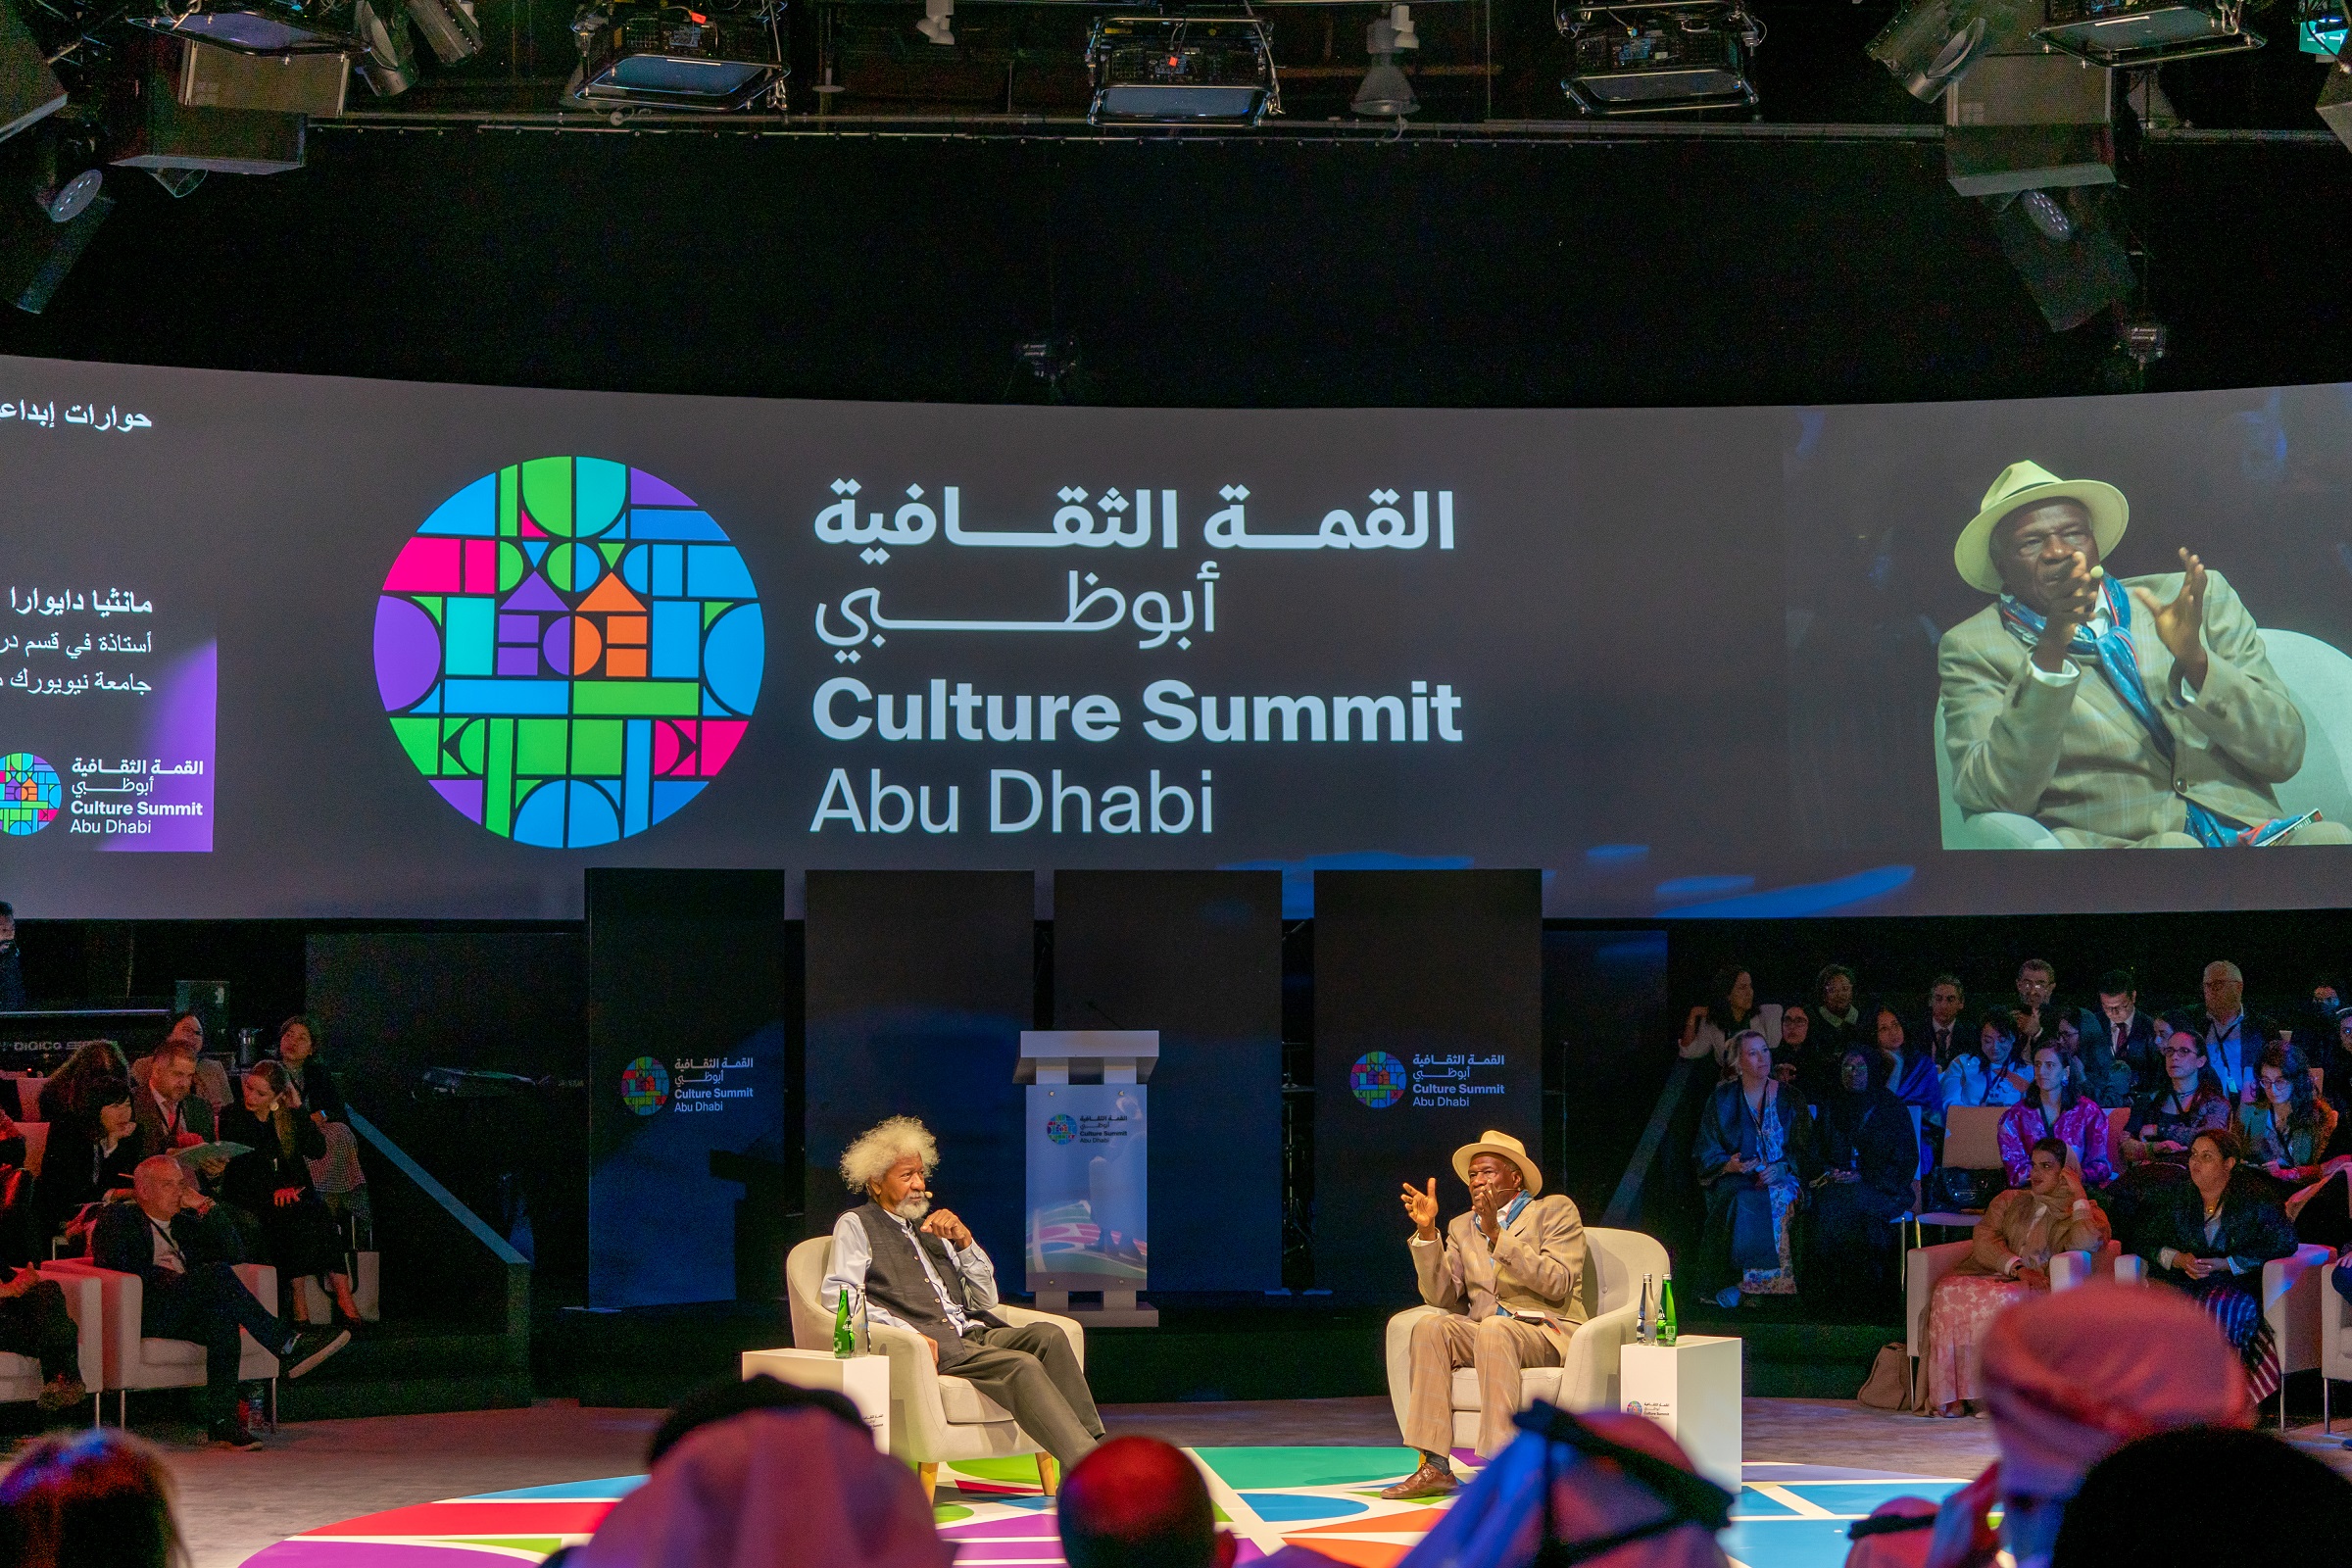 culture summit abu dhabi kicks off at manarat al saadiyat